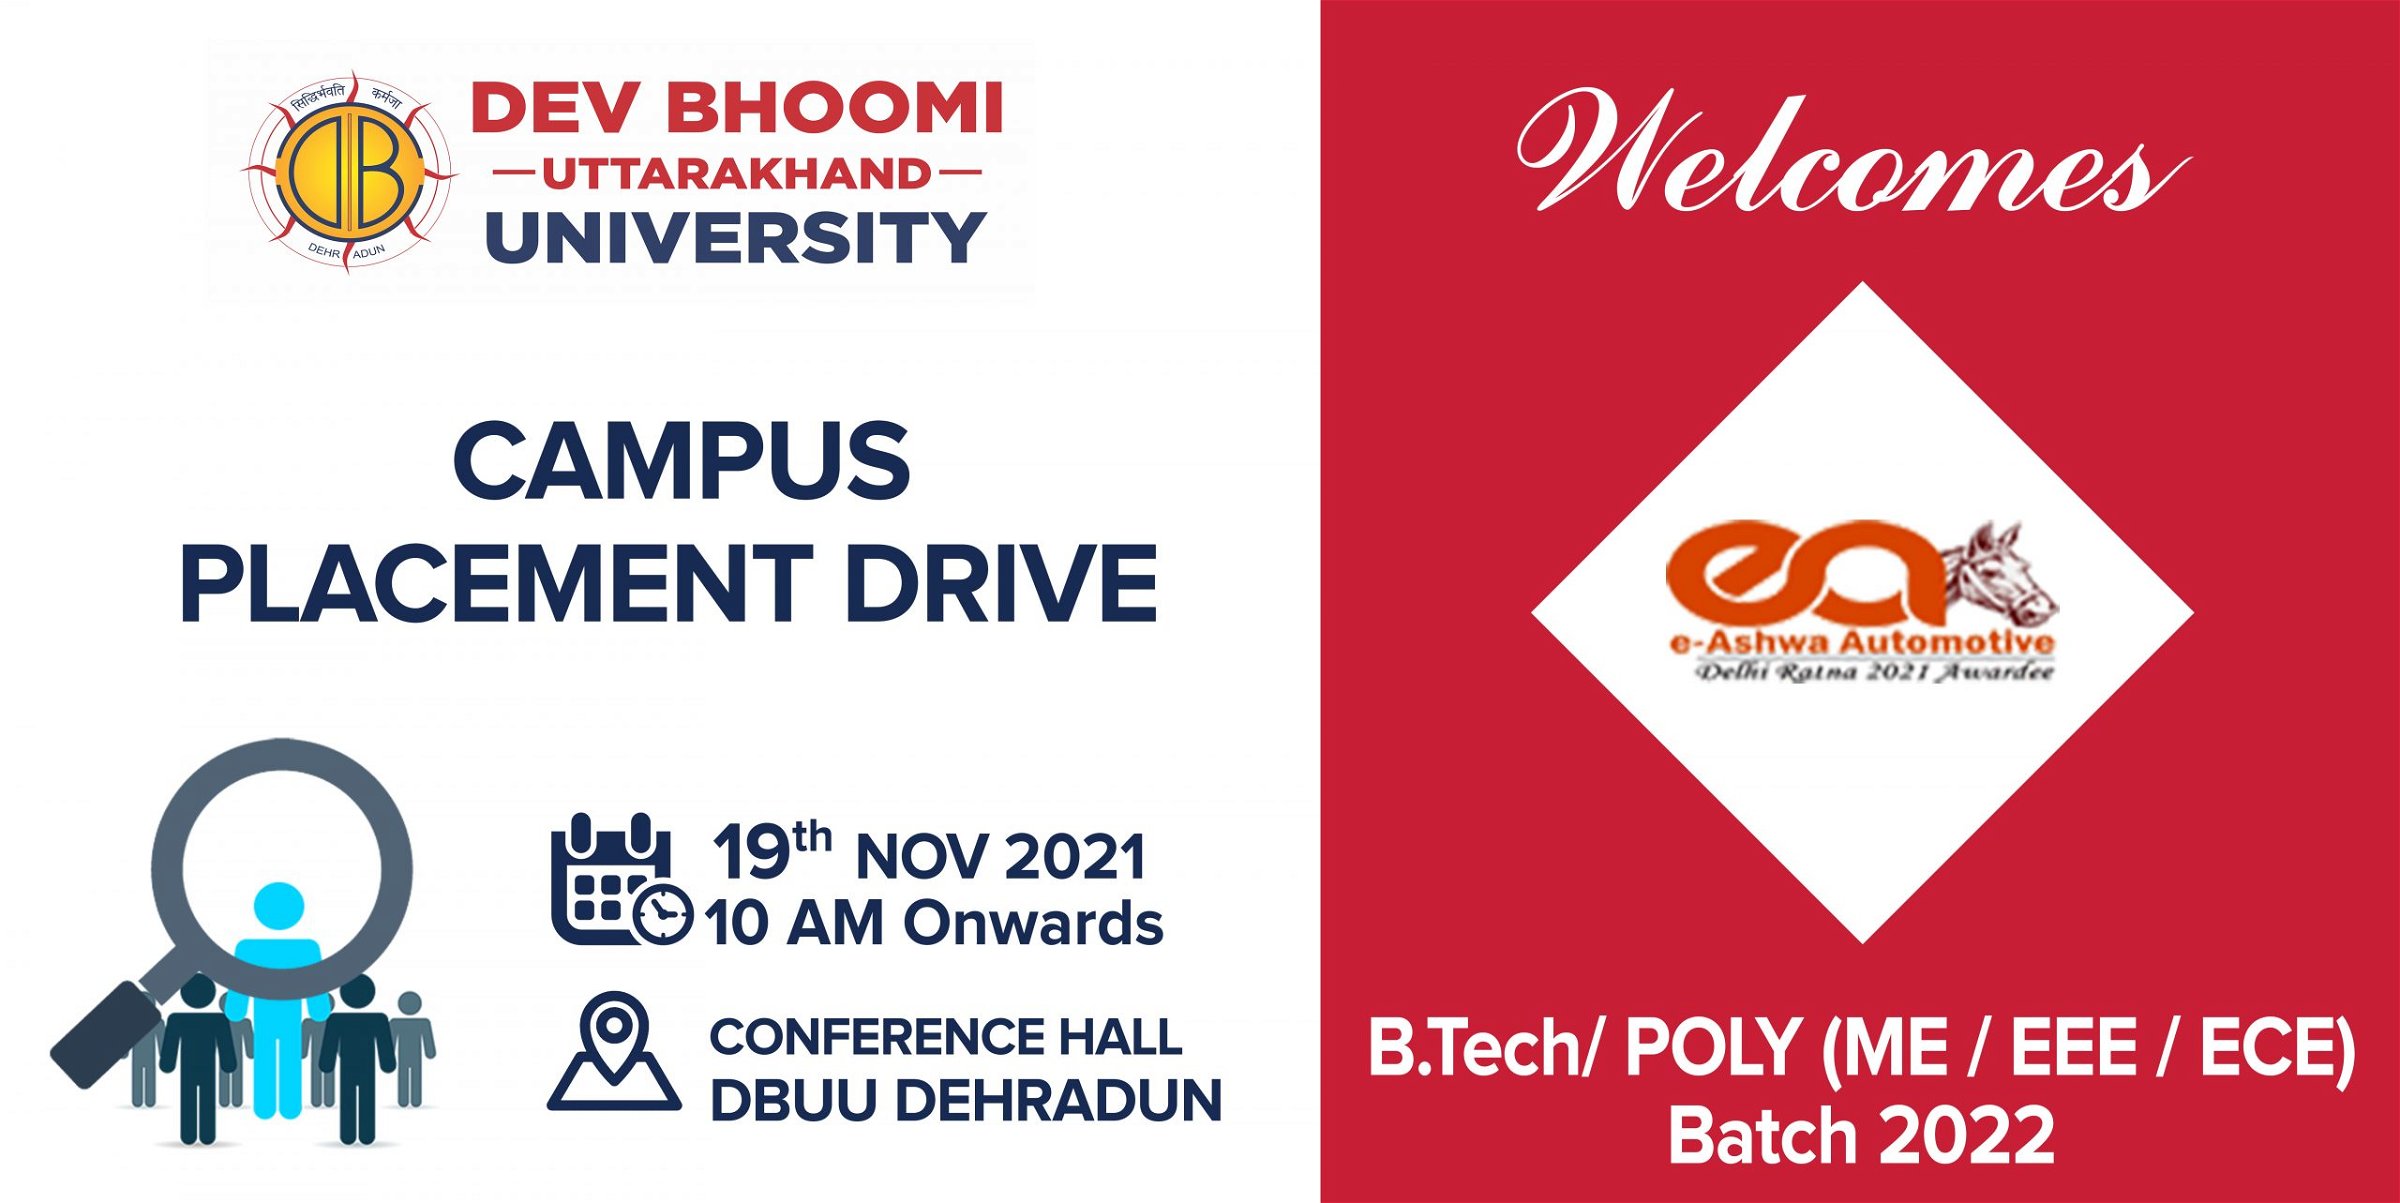 Campus Drive of e-Ashwa Automotive Pvt Ltd.